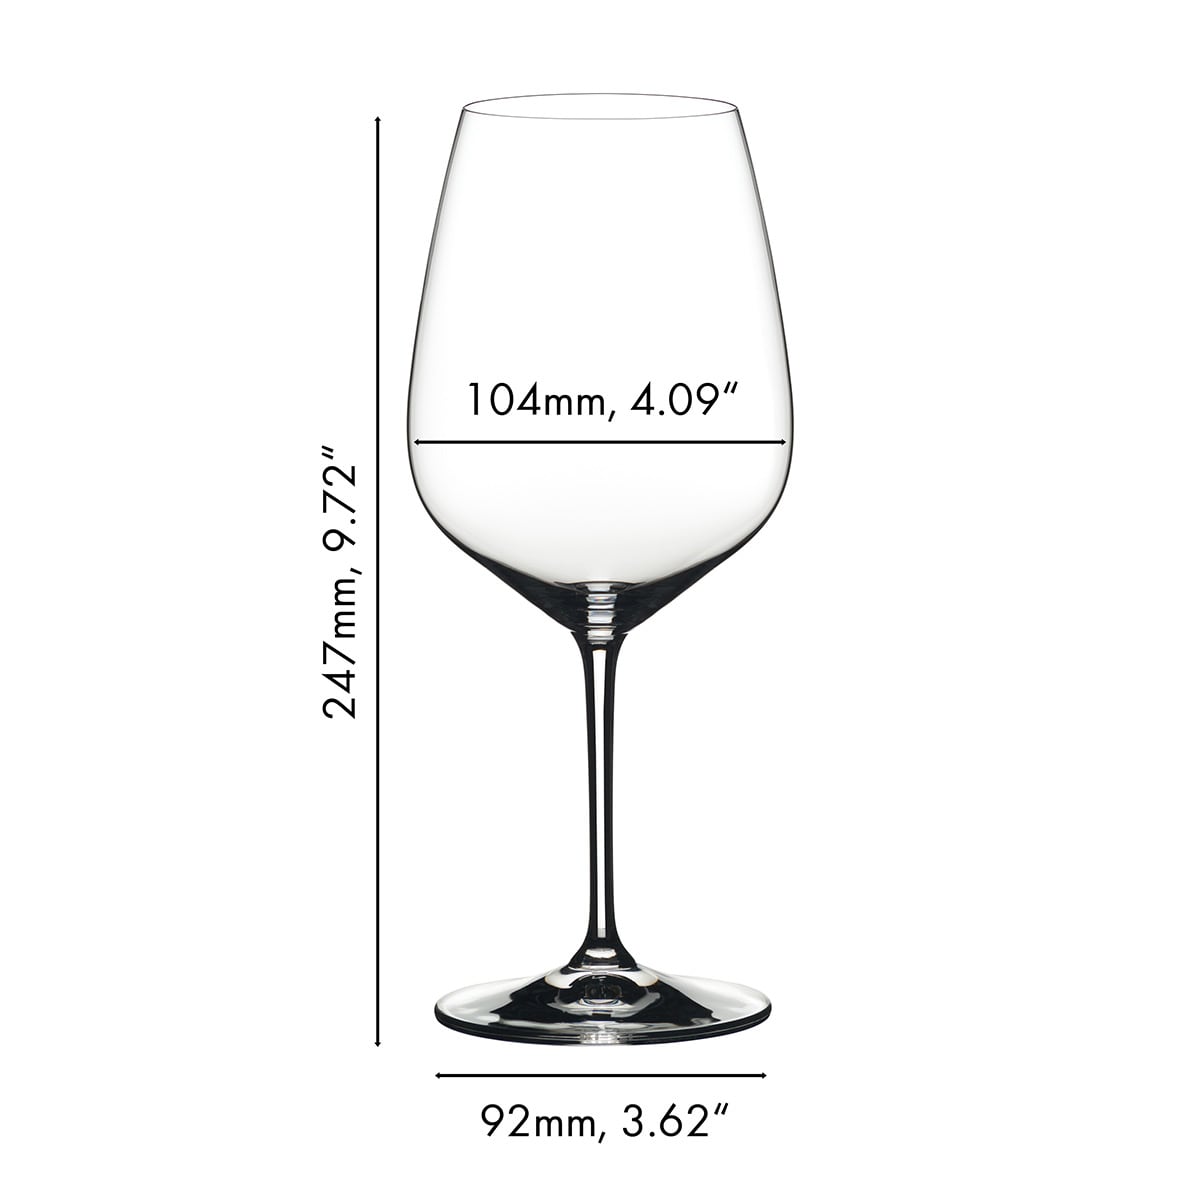 Riedel Wine Glasses, Engraved, Set of 2 - Cabernet/Red Wine Glasses